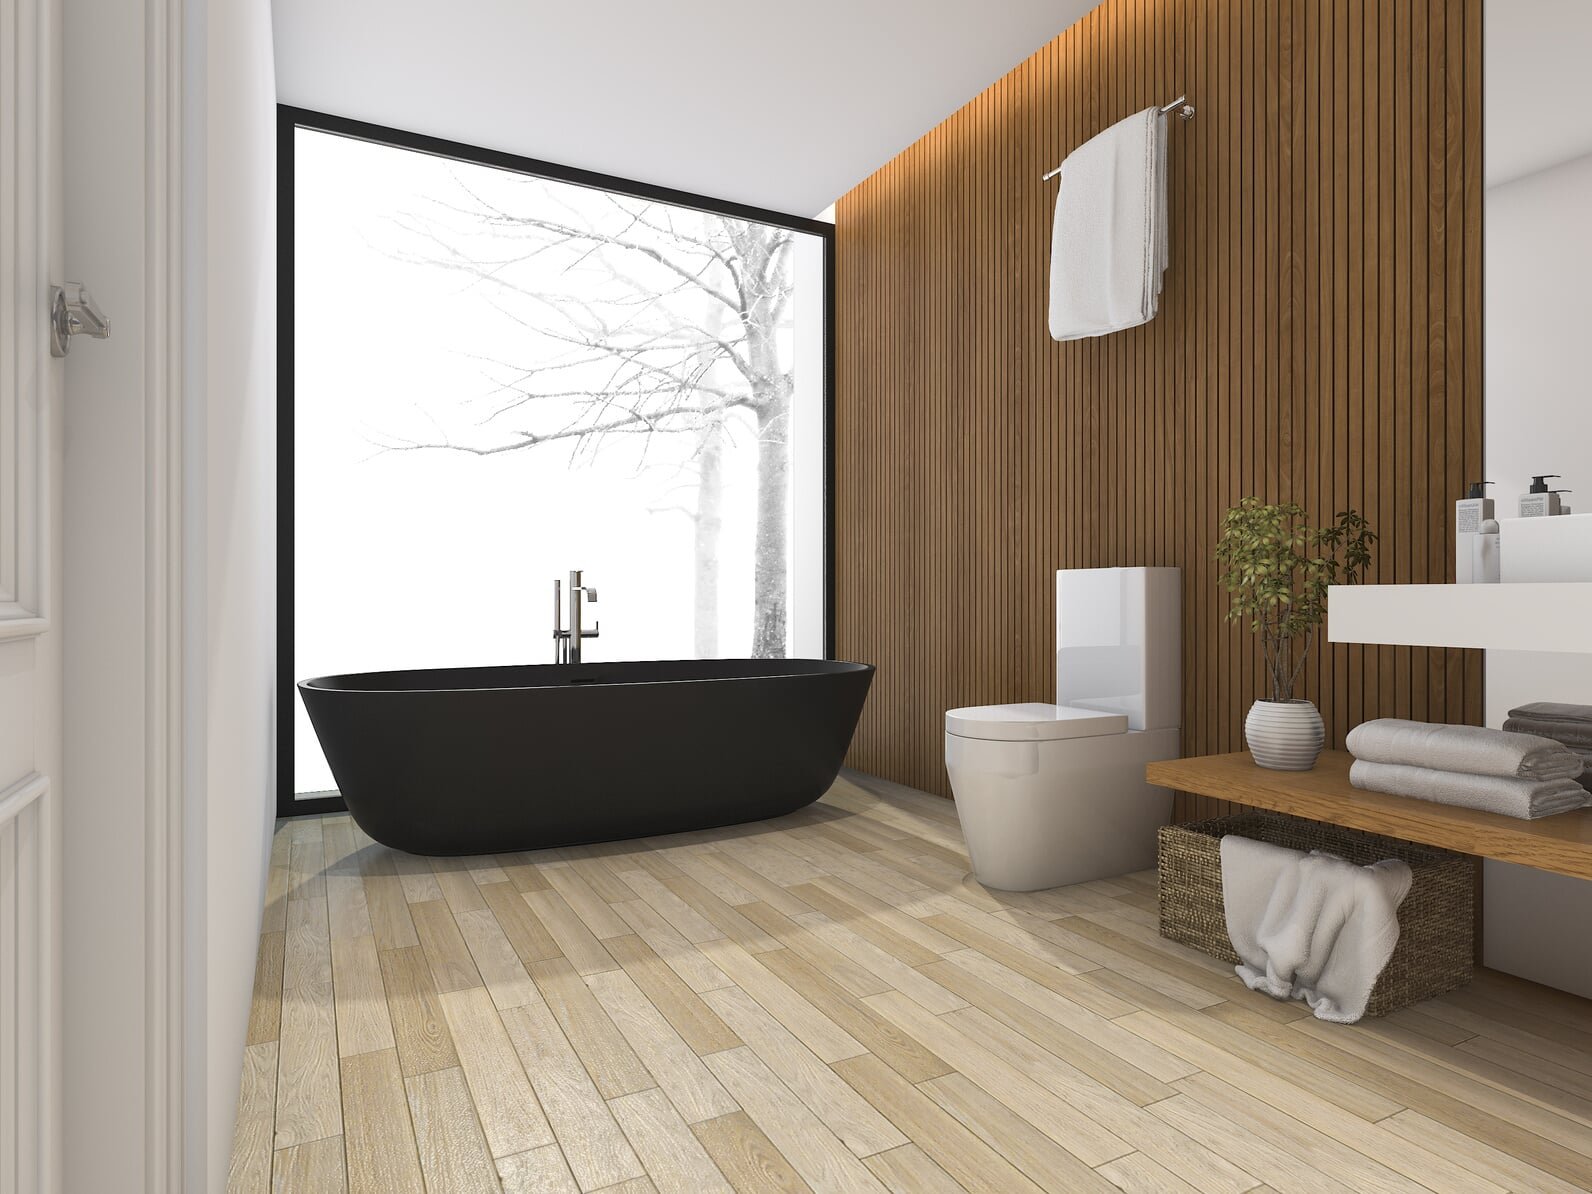 Bathroom decorating tips: Is luxury vinyl flooring a good fit?